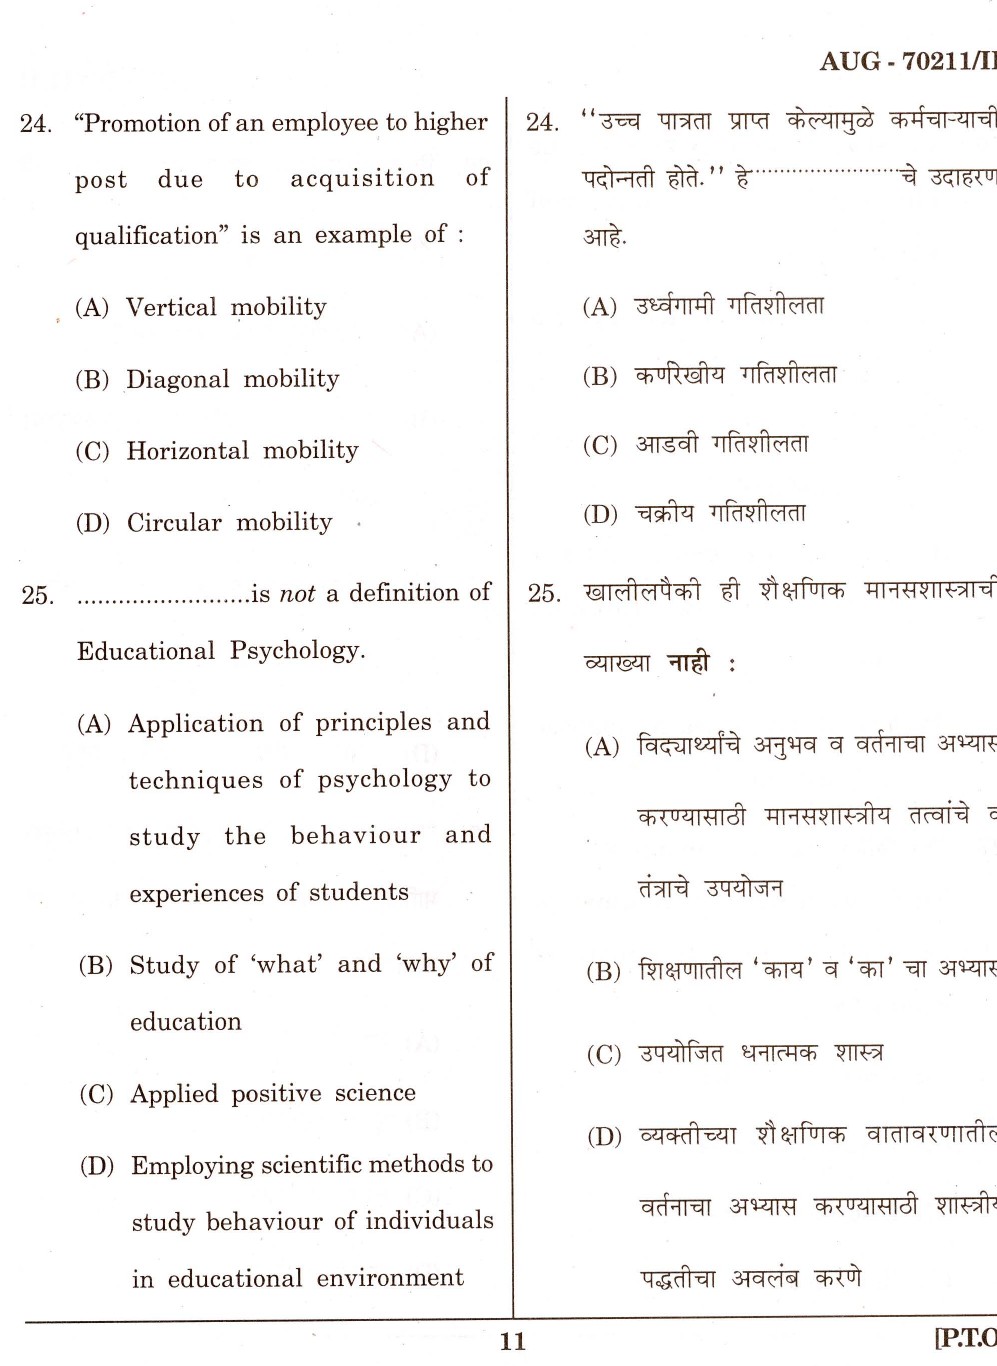 Maharashtra SET Education Question Paper II August 2011 11